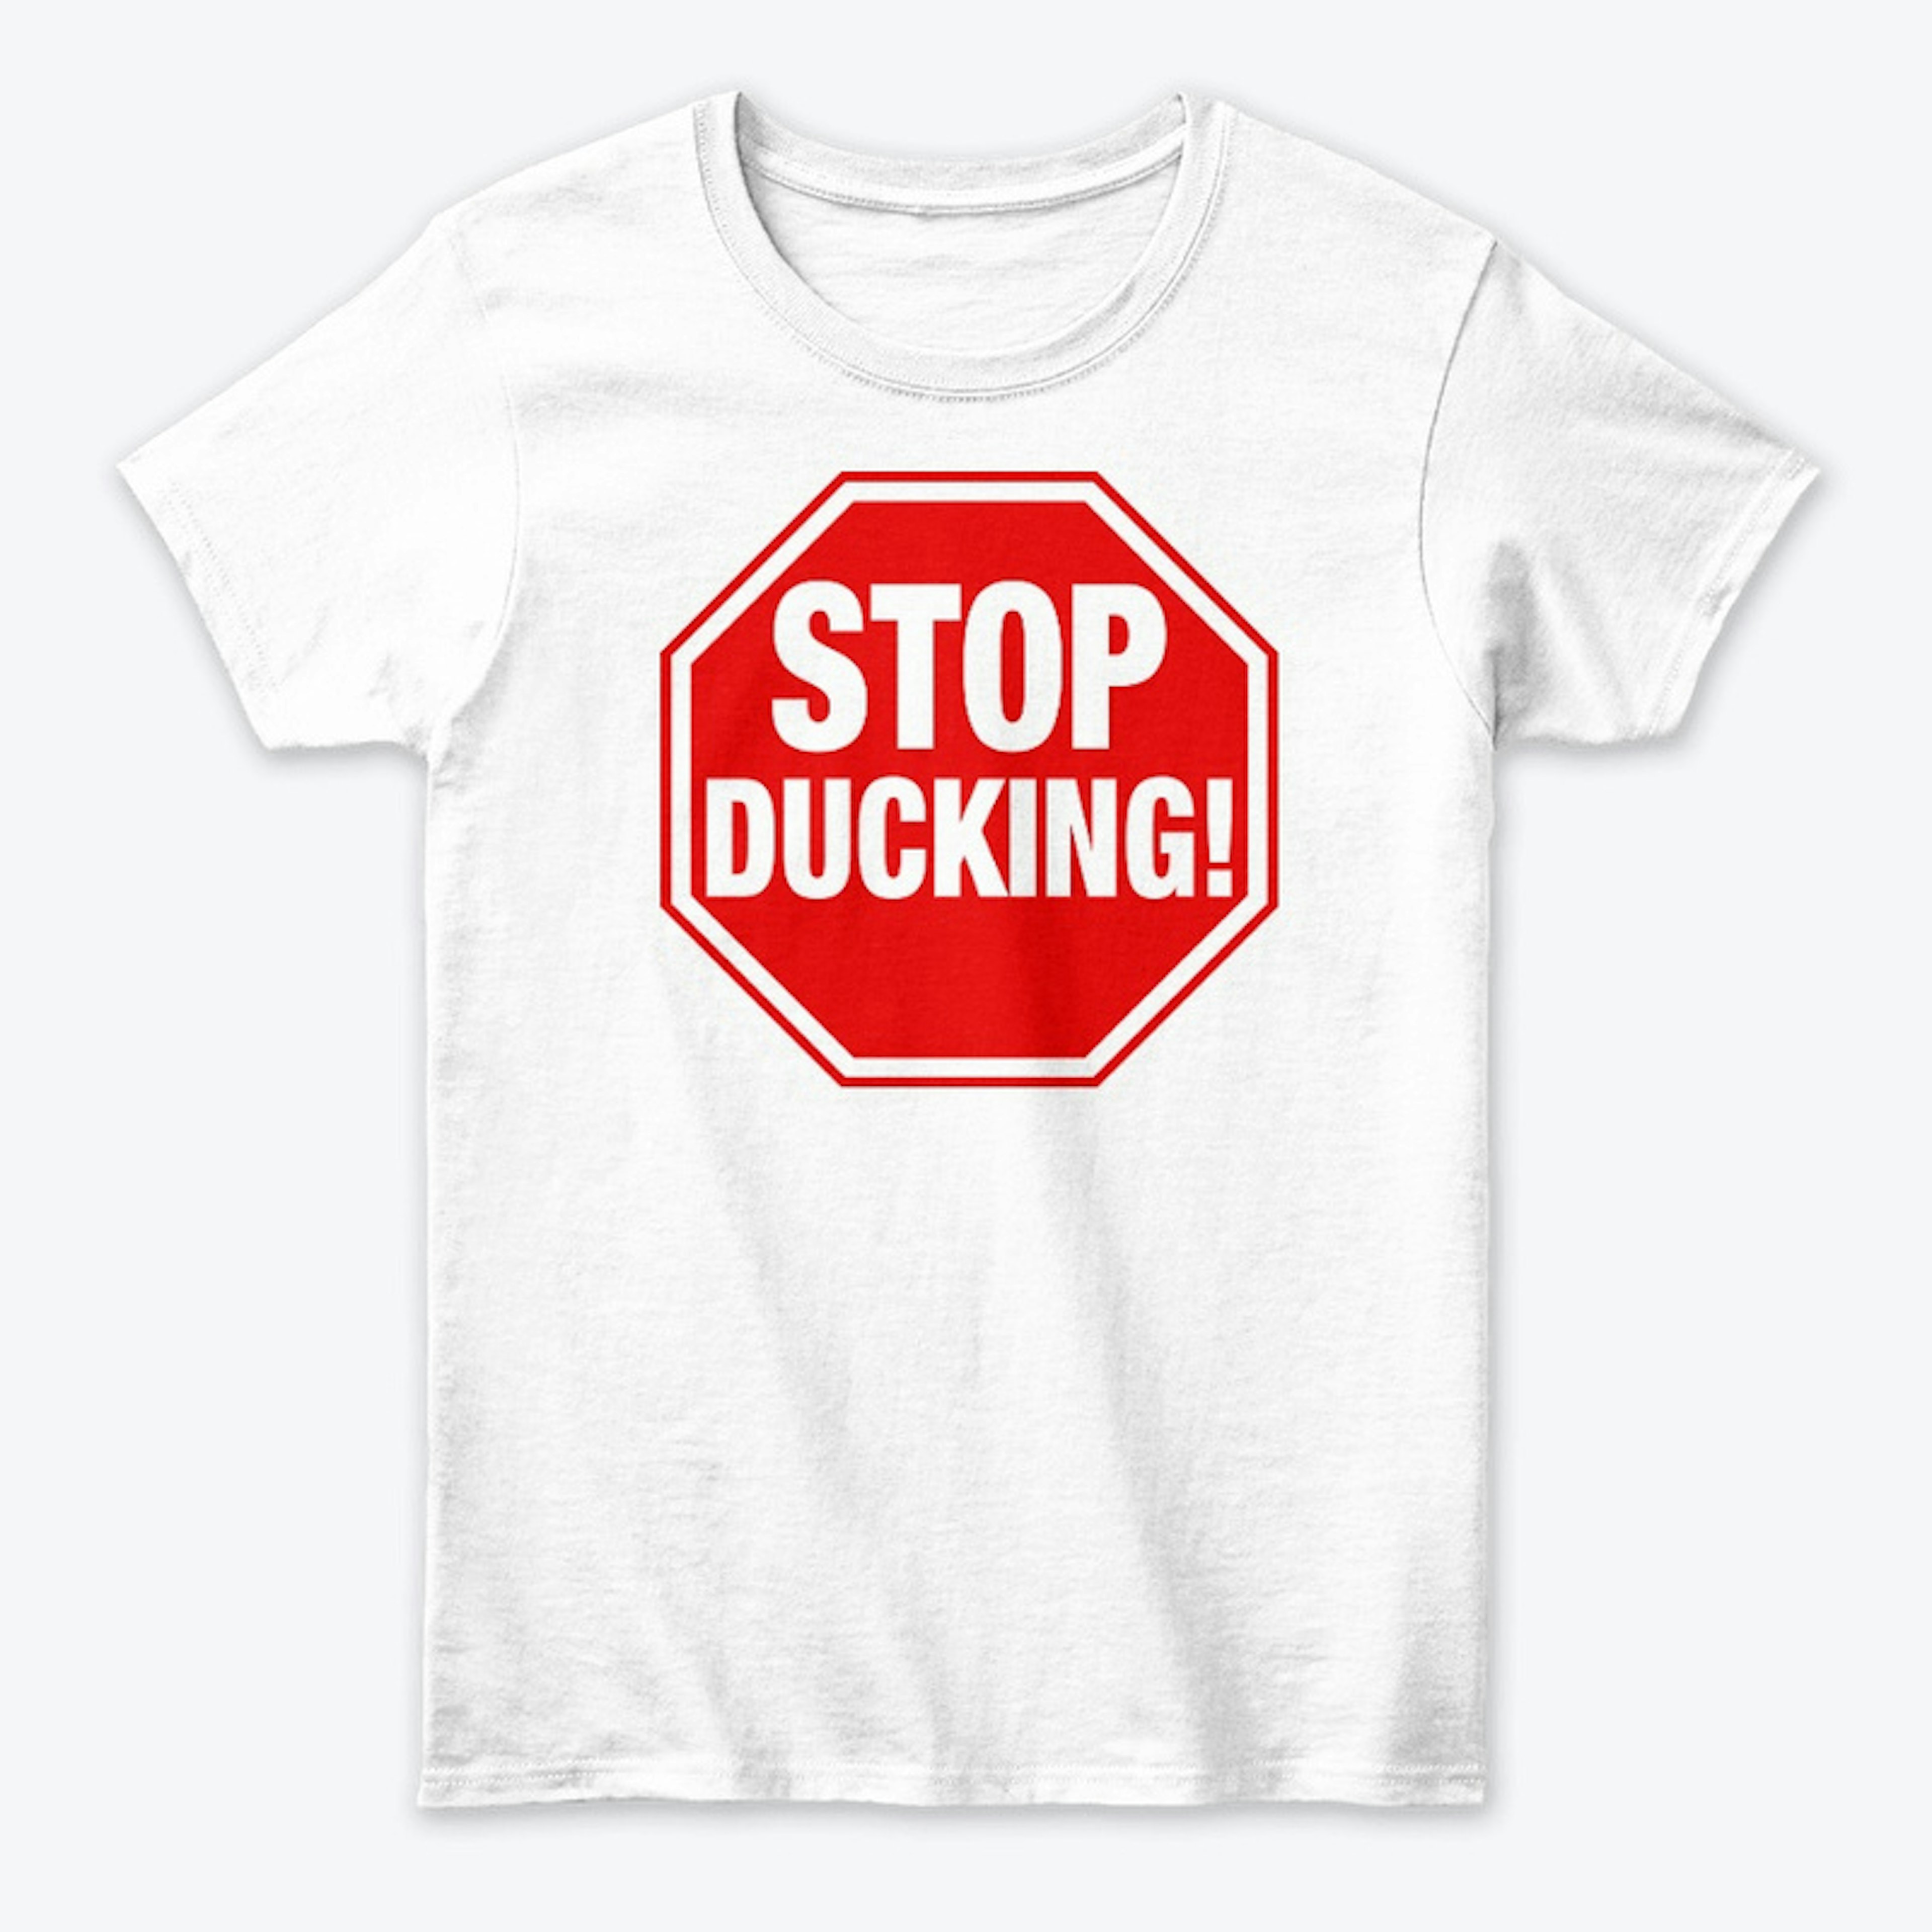 Stop Ducking!